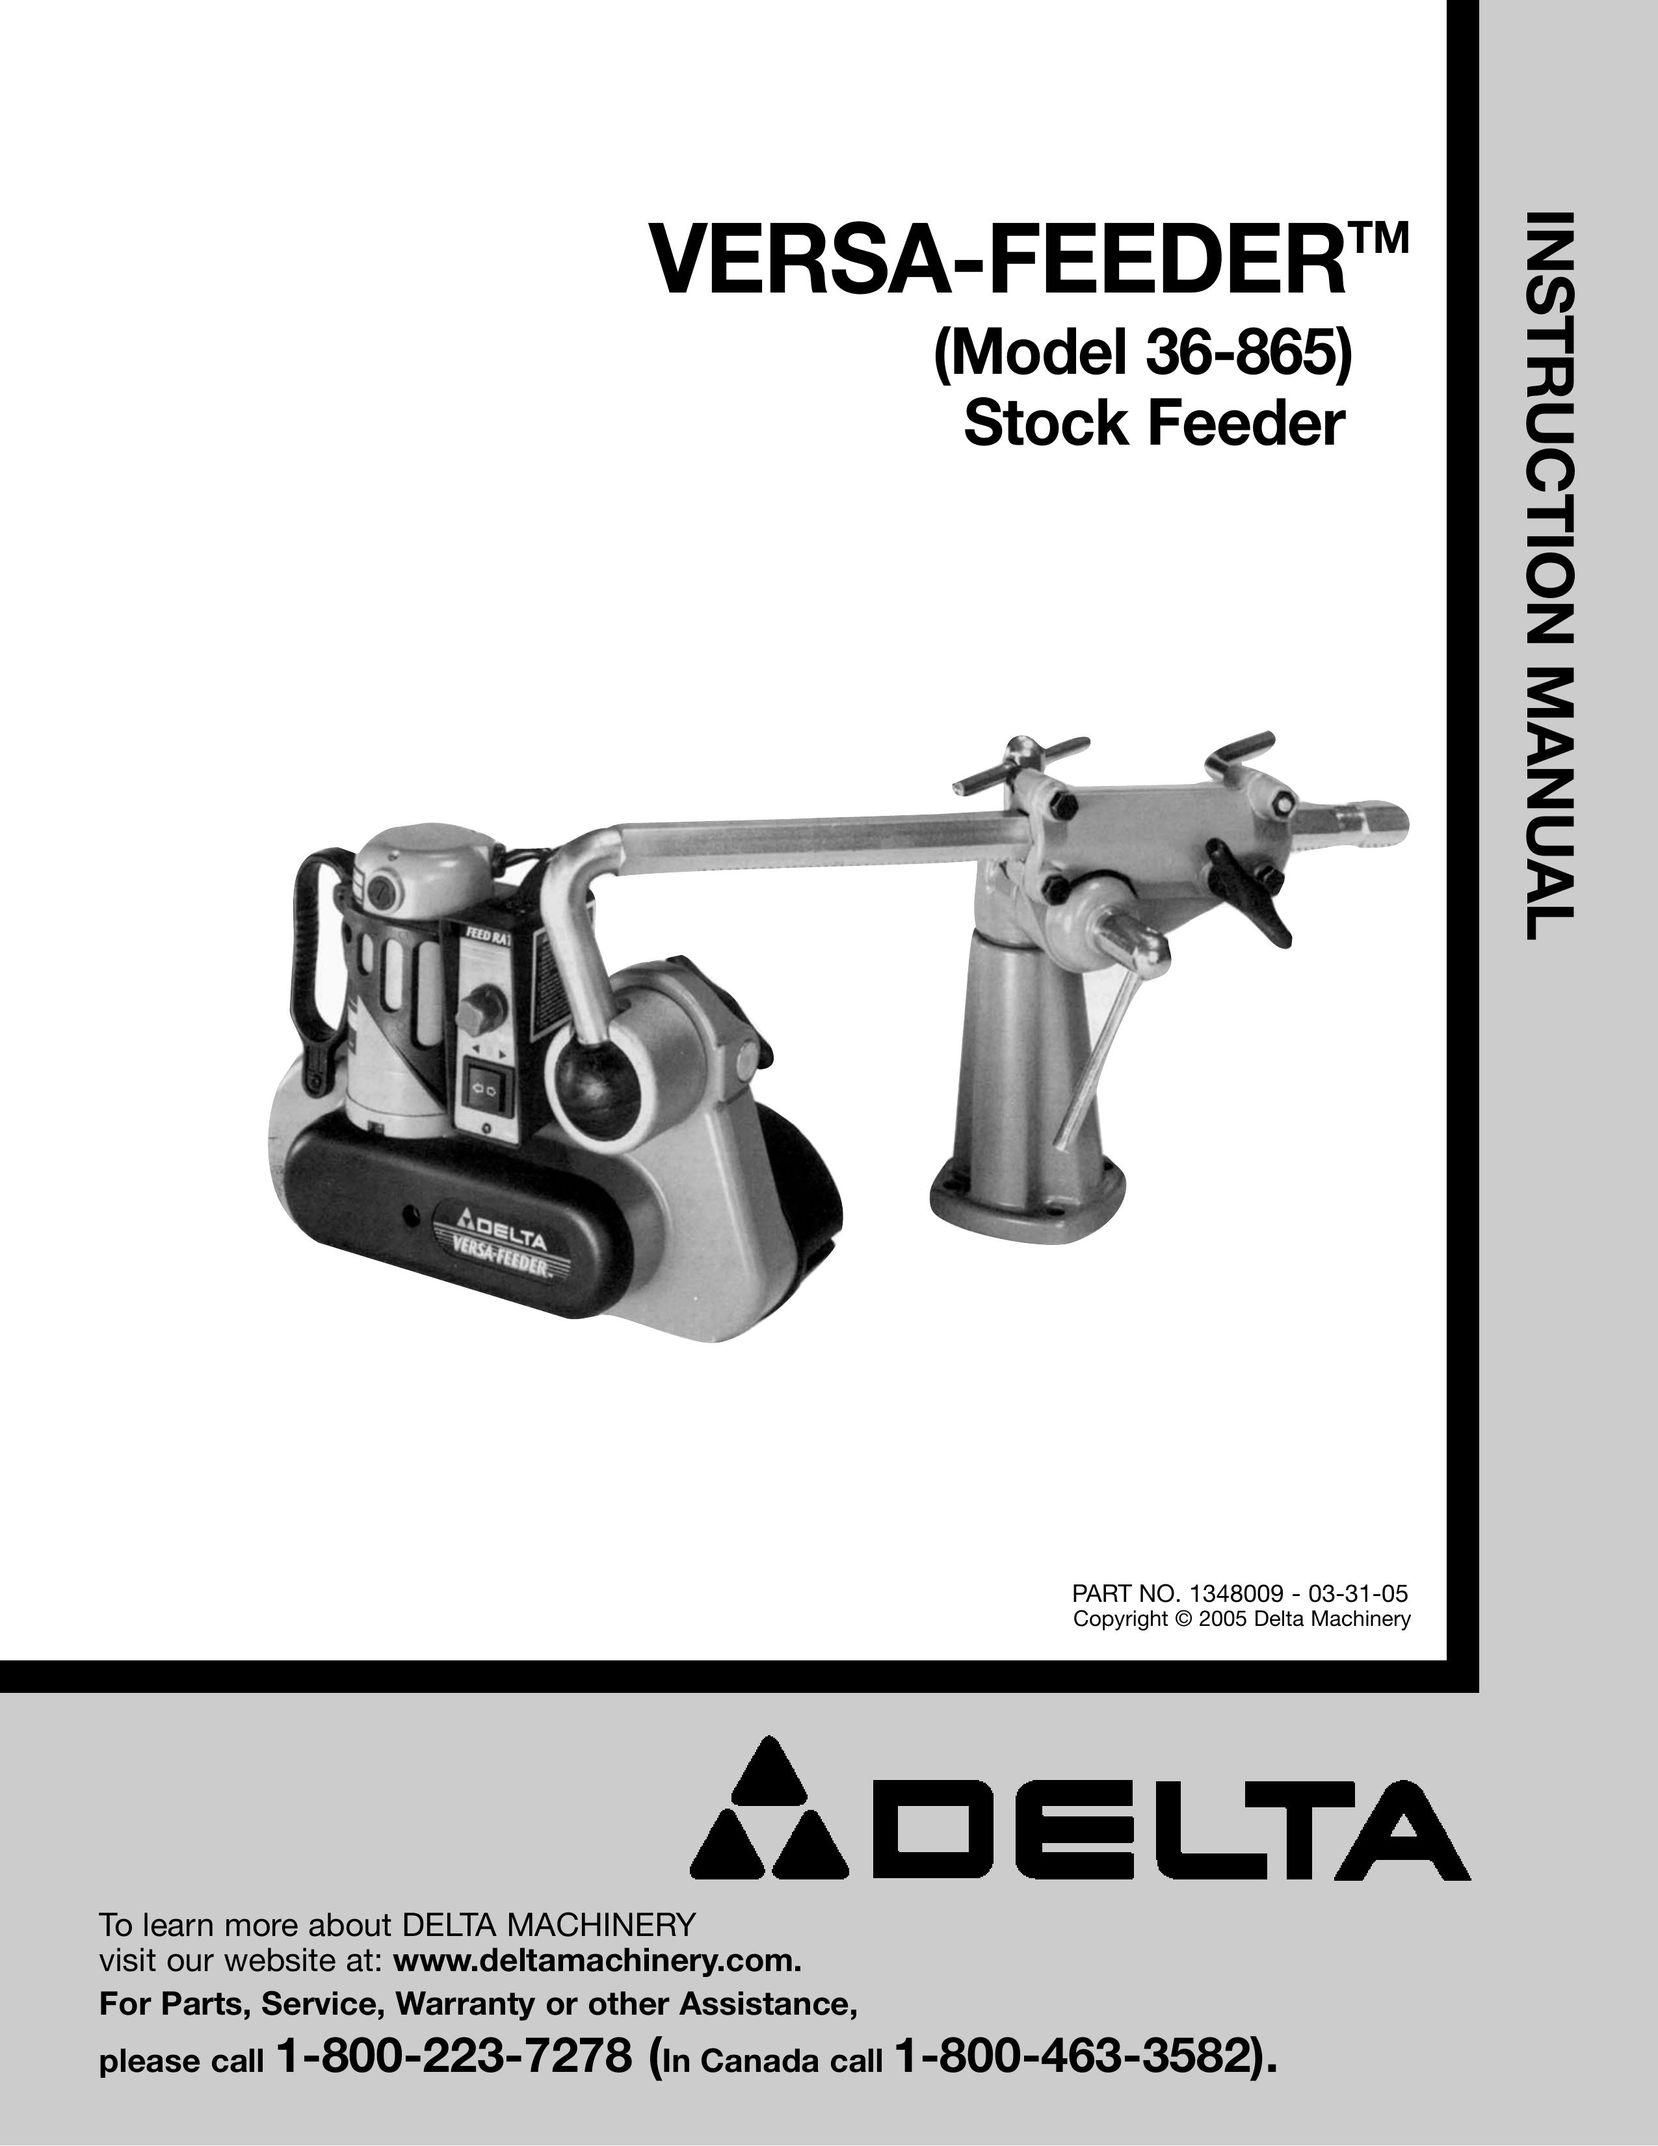 Delta 36-865 Welder User Manual